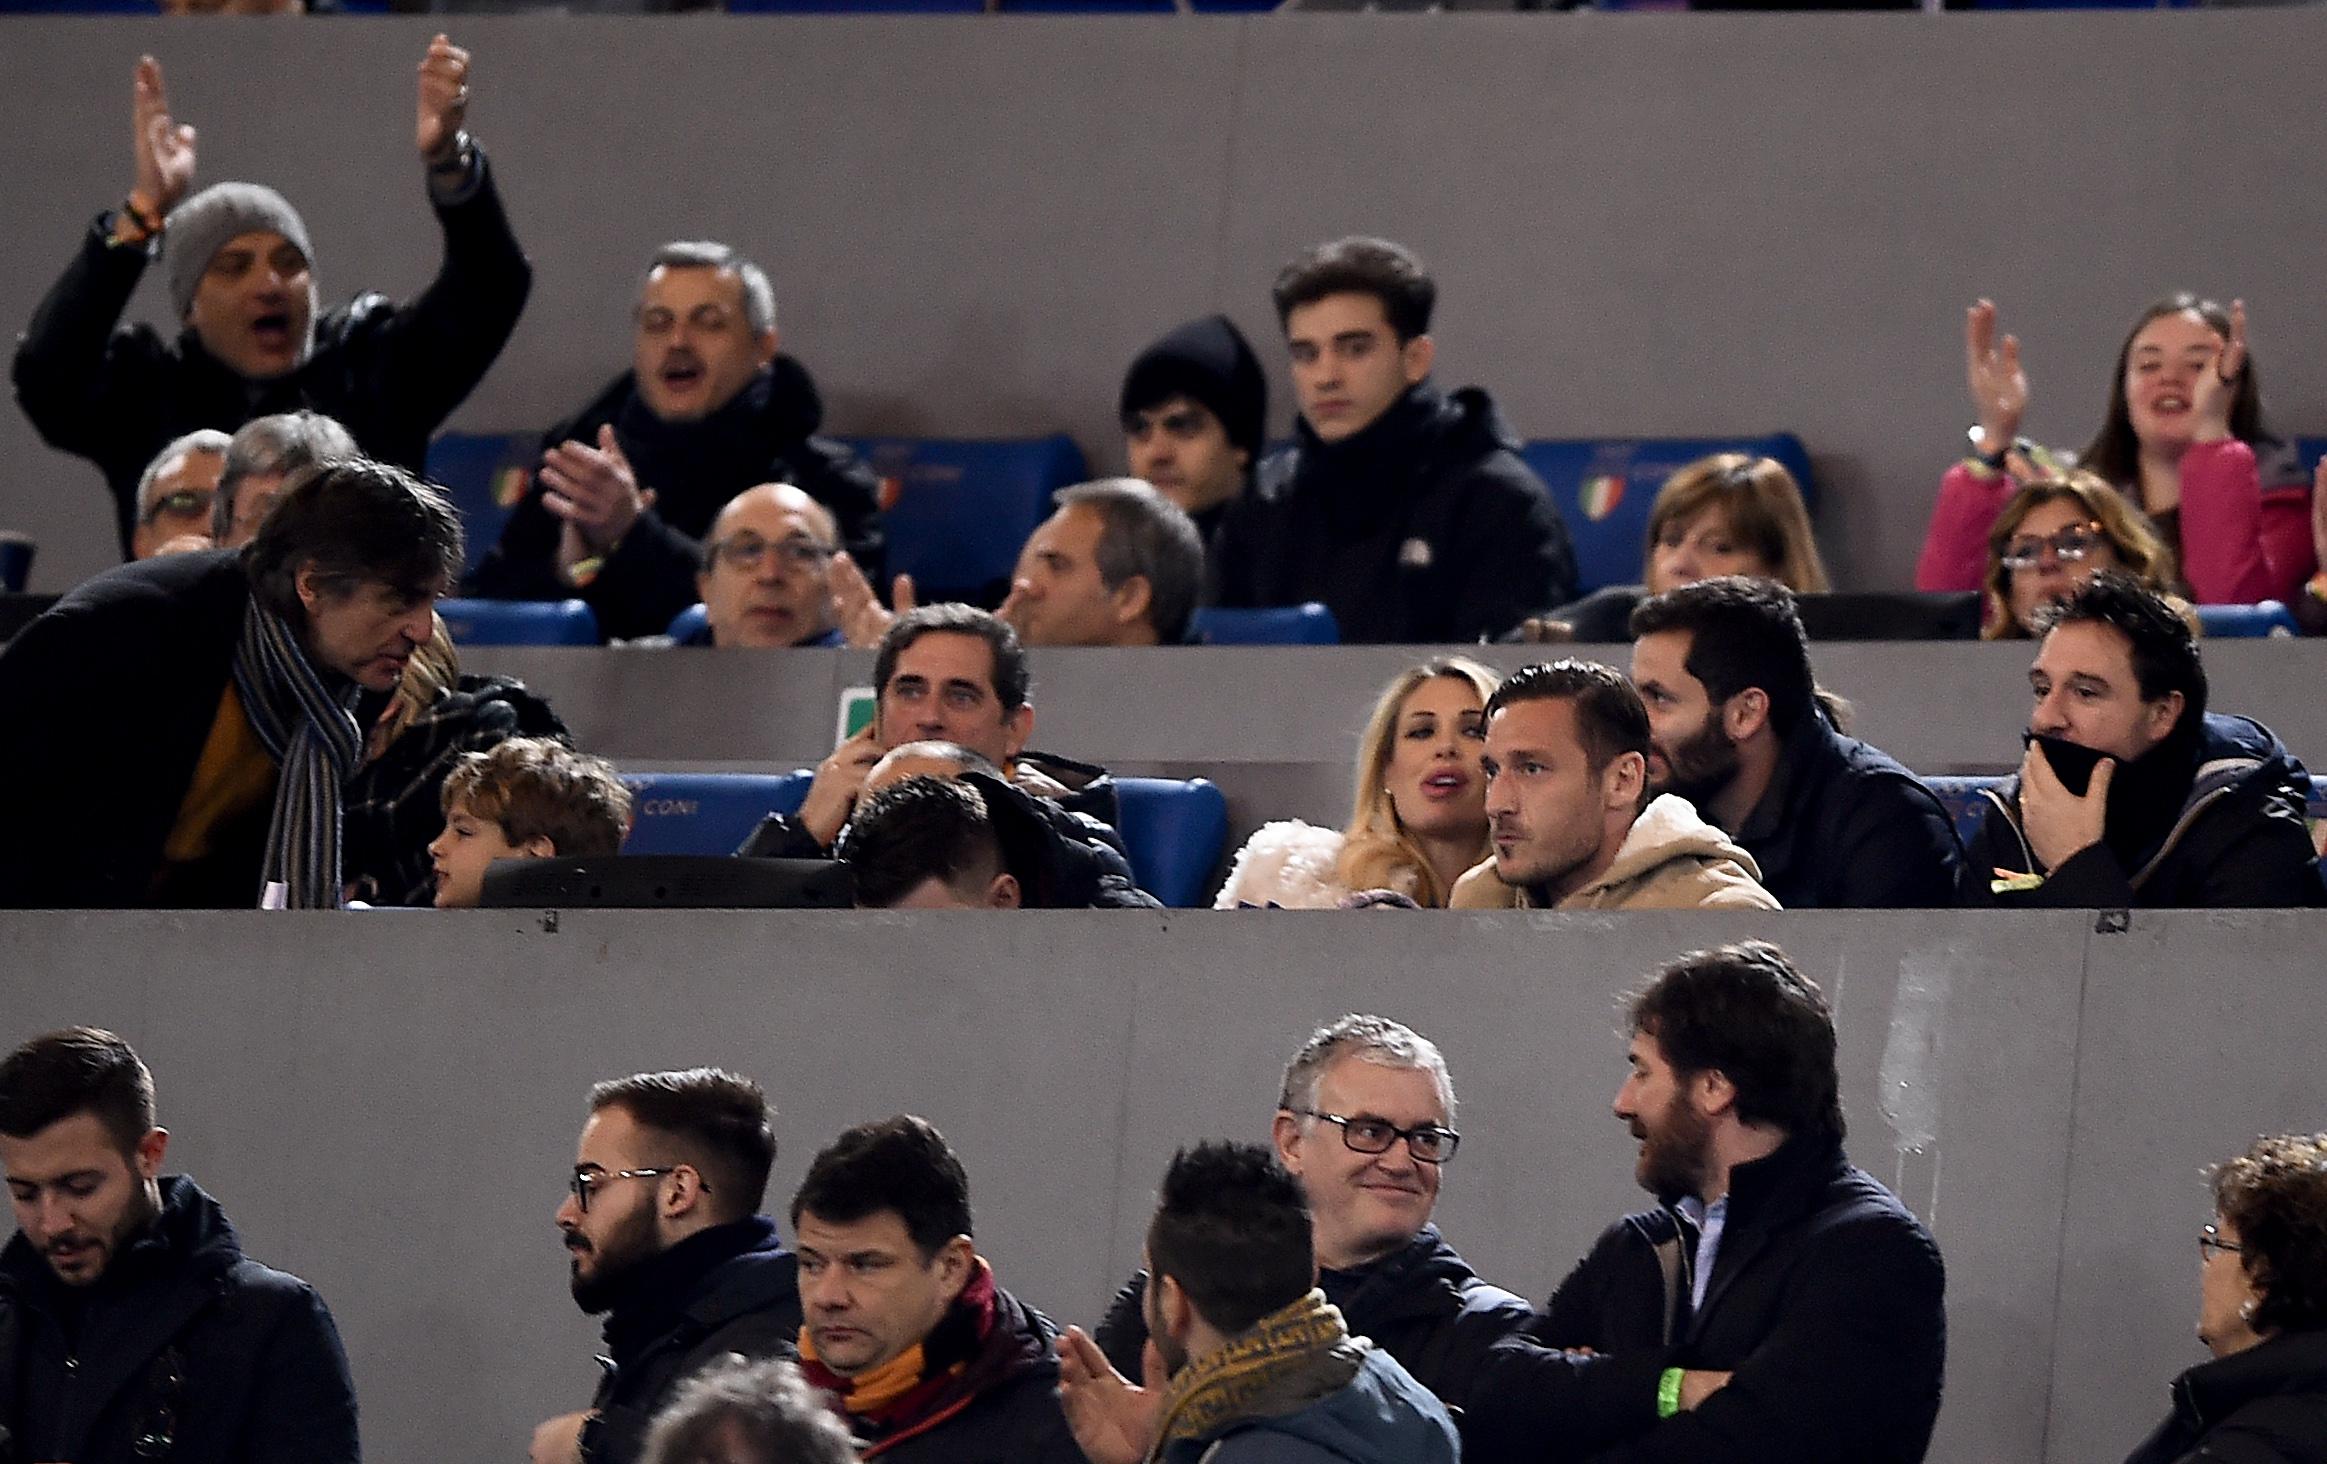  Francesco Totti e Ilary Blasi in tribuna (Afp)